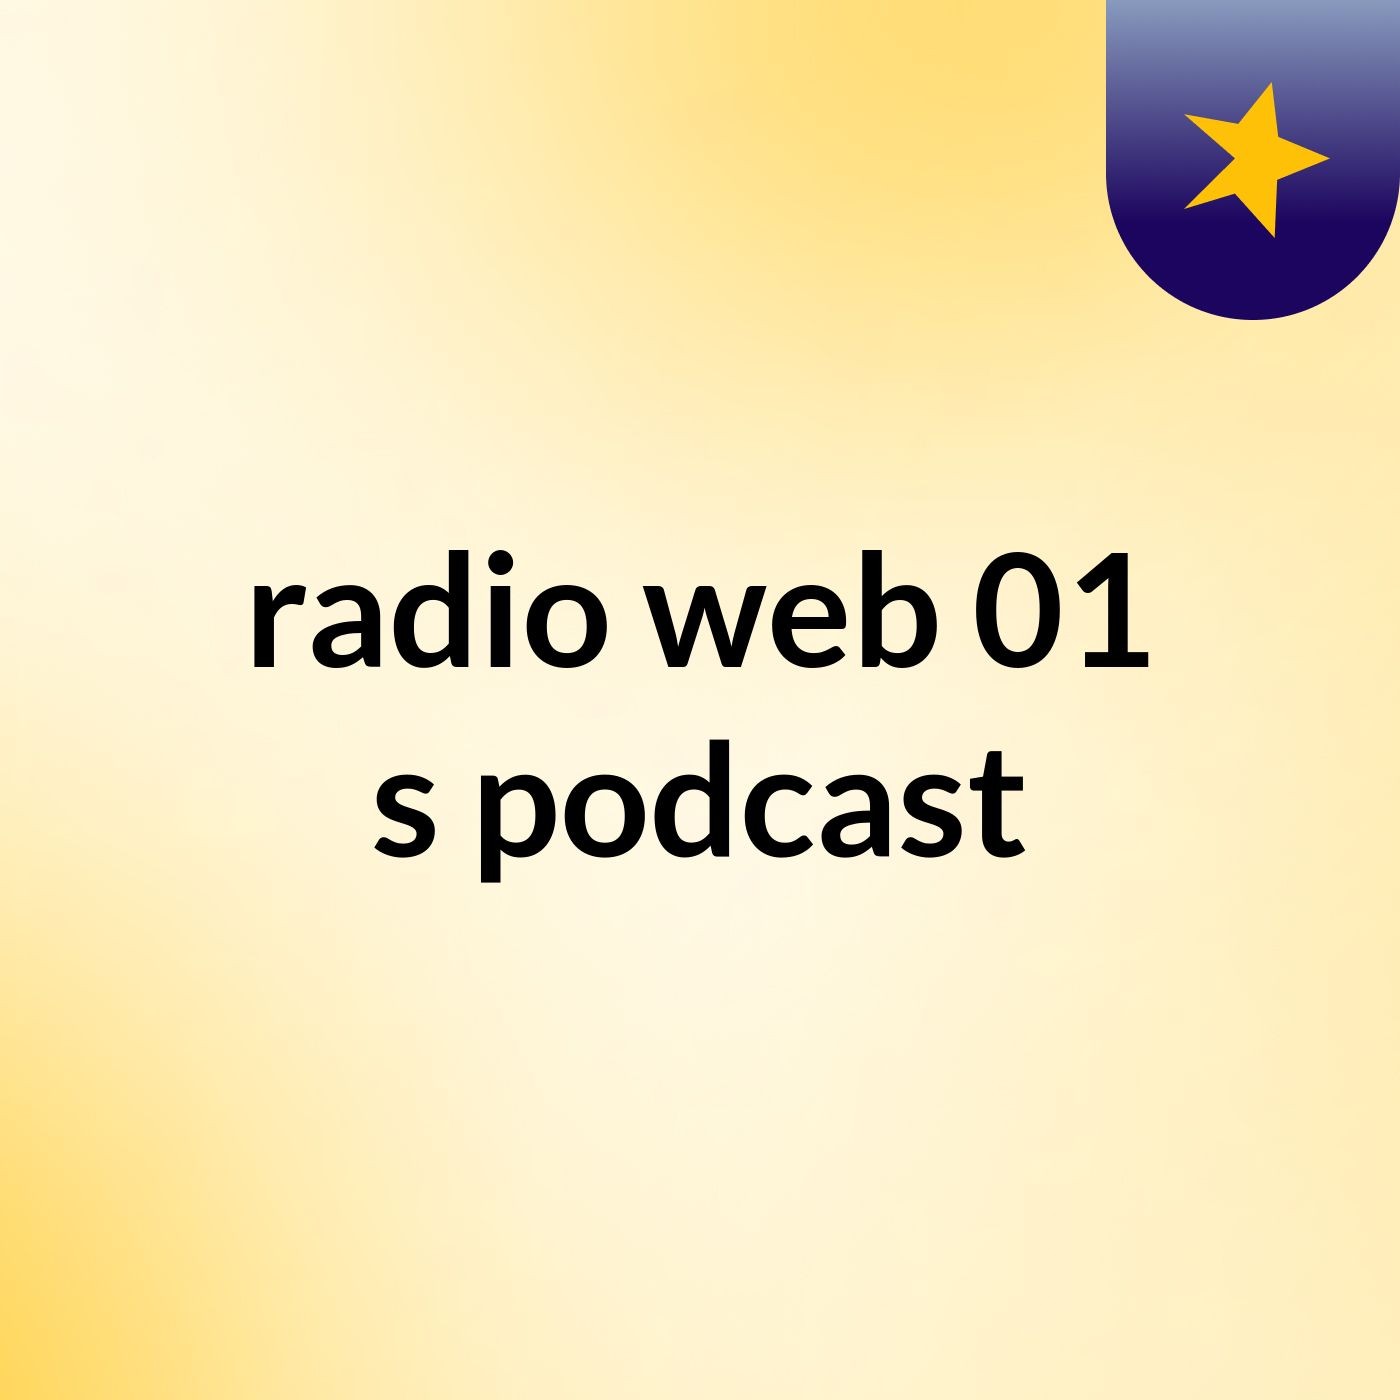 radio web 01's podcast